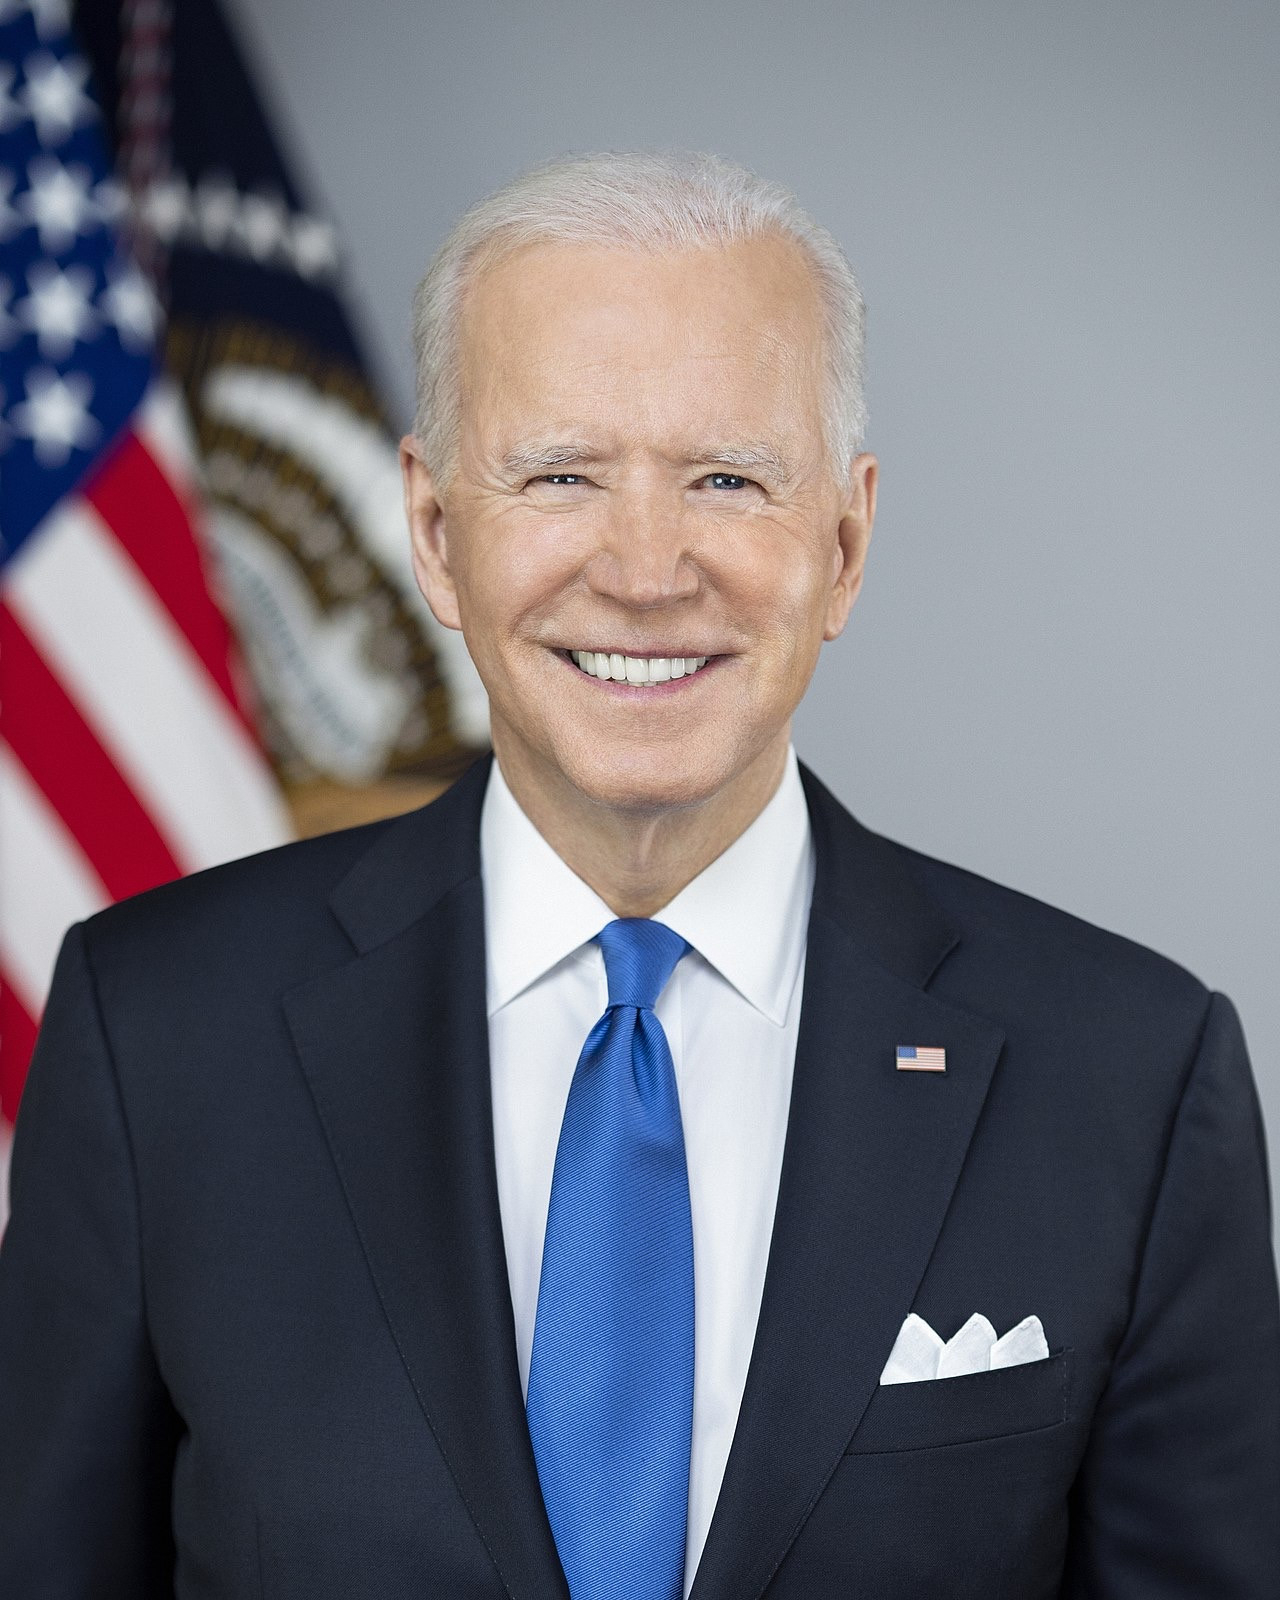 Official portrait of President Biden